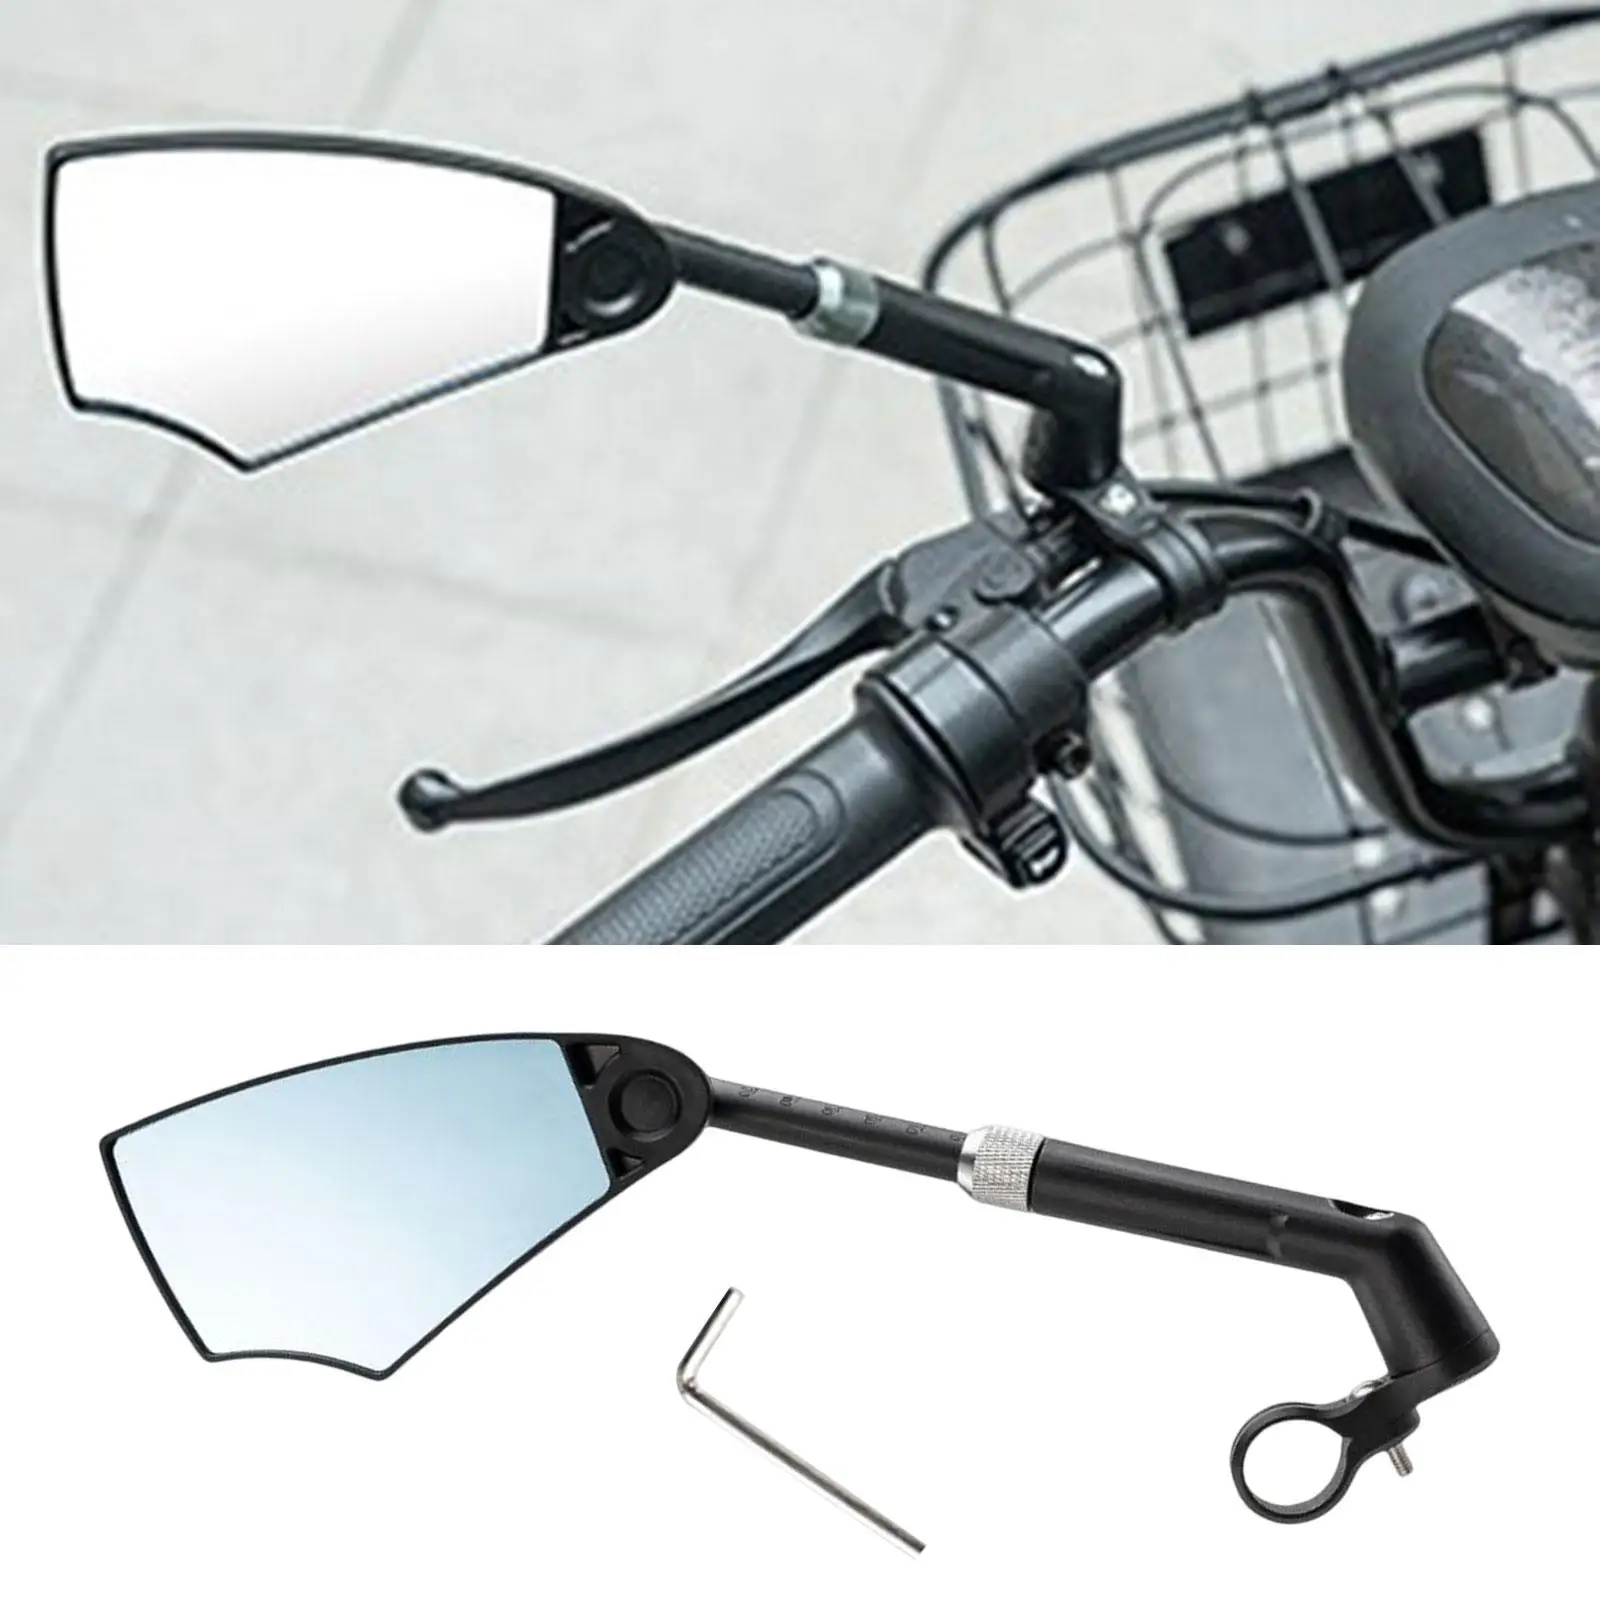 Bike Rear View Mirror Handlebar 20-23mm Extension Rotatable Wide Angle Bike Handlebar Mirror for Cycling Modification Adult